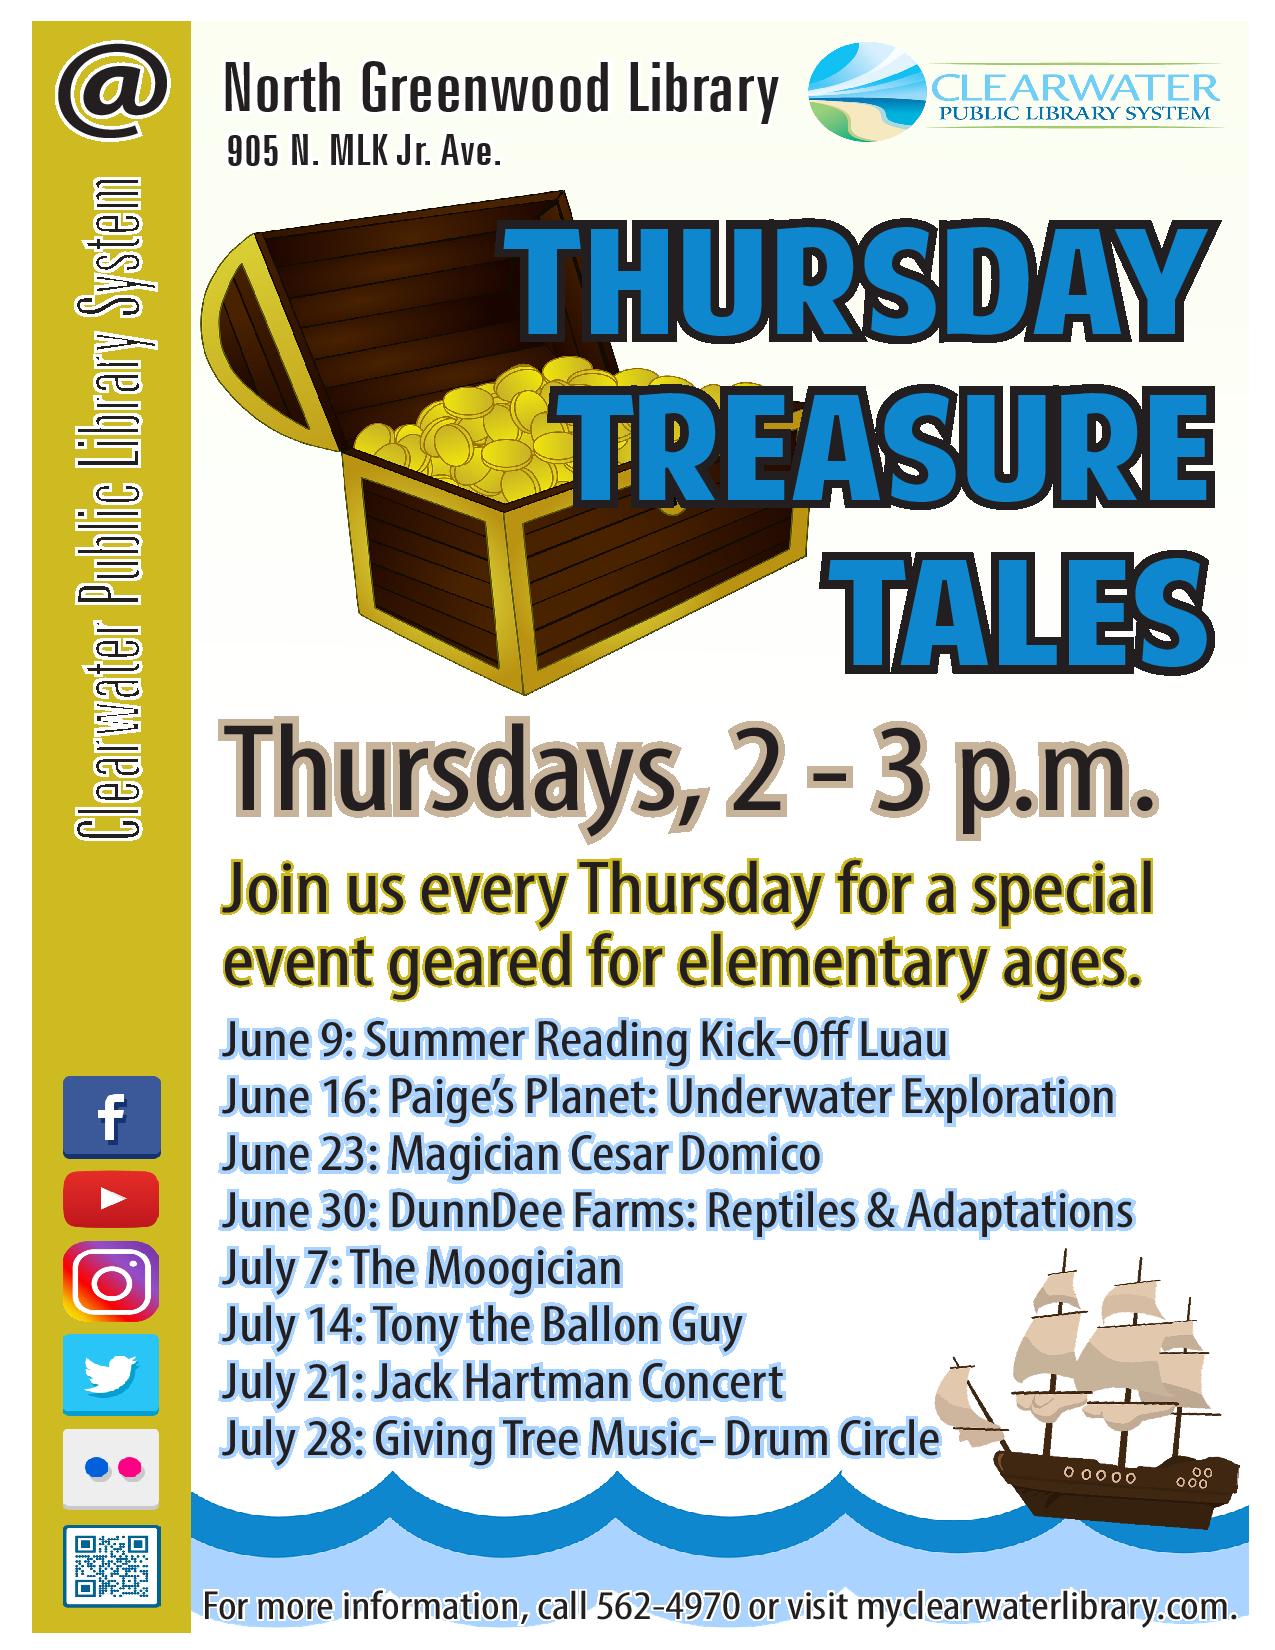 Thursday Treasure Tales